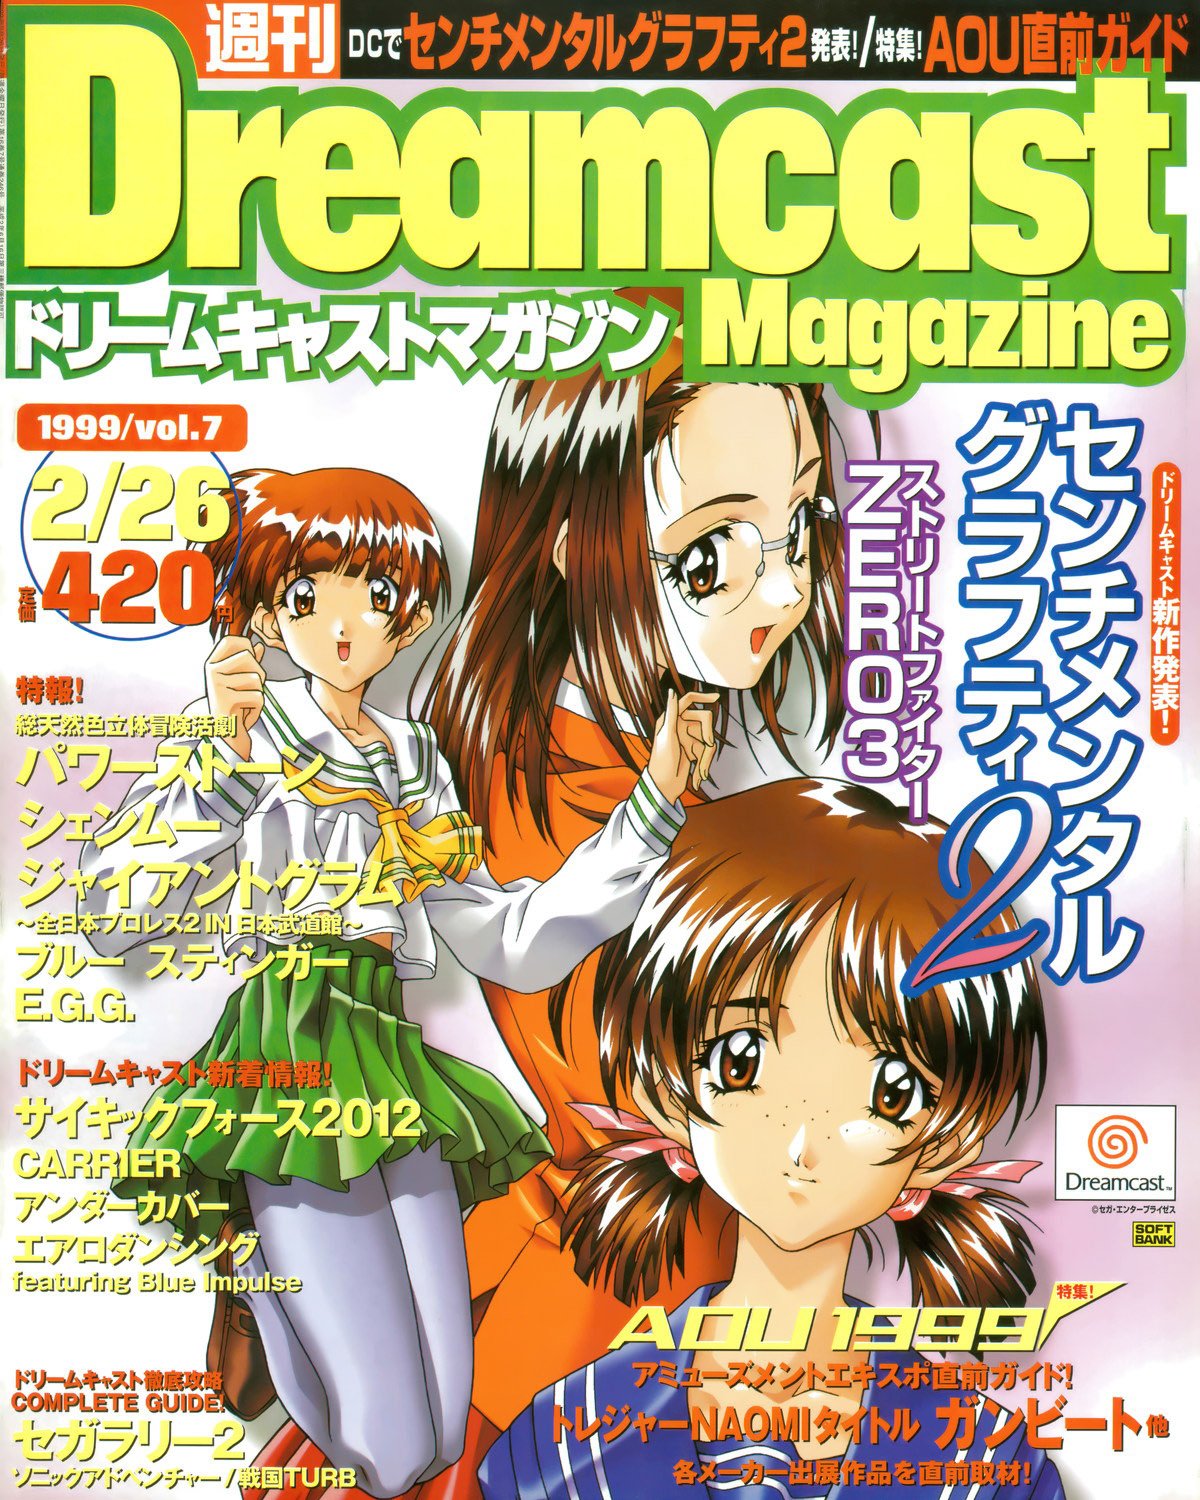 Dreamcast Magazine 013 (February 26, 1999)